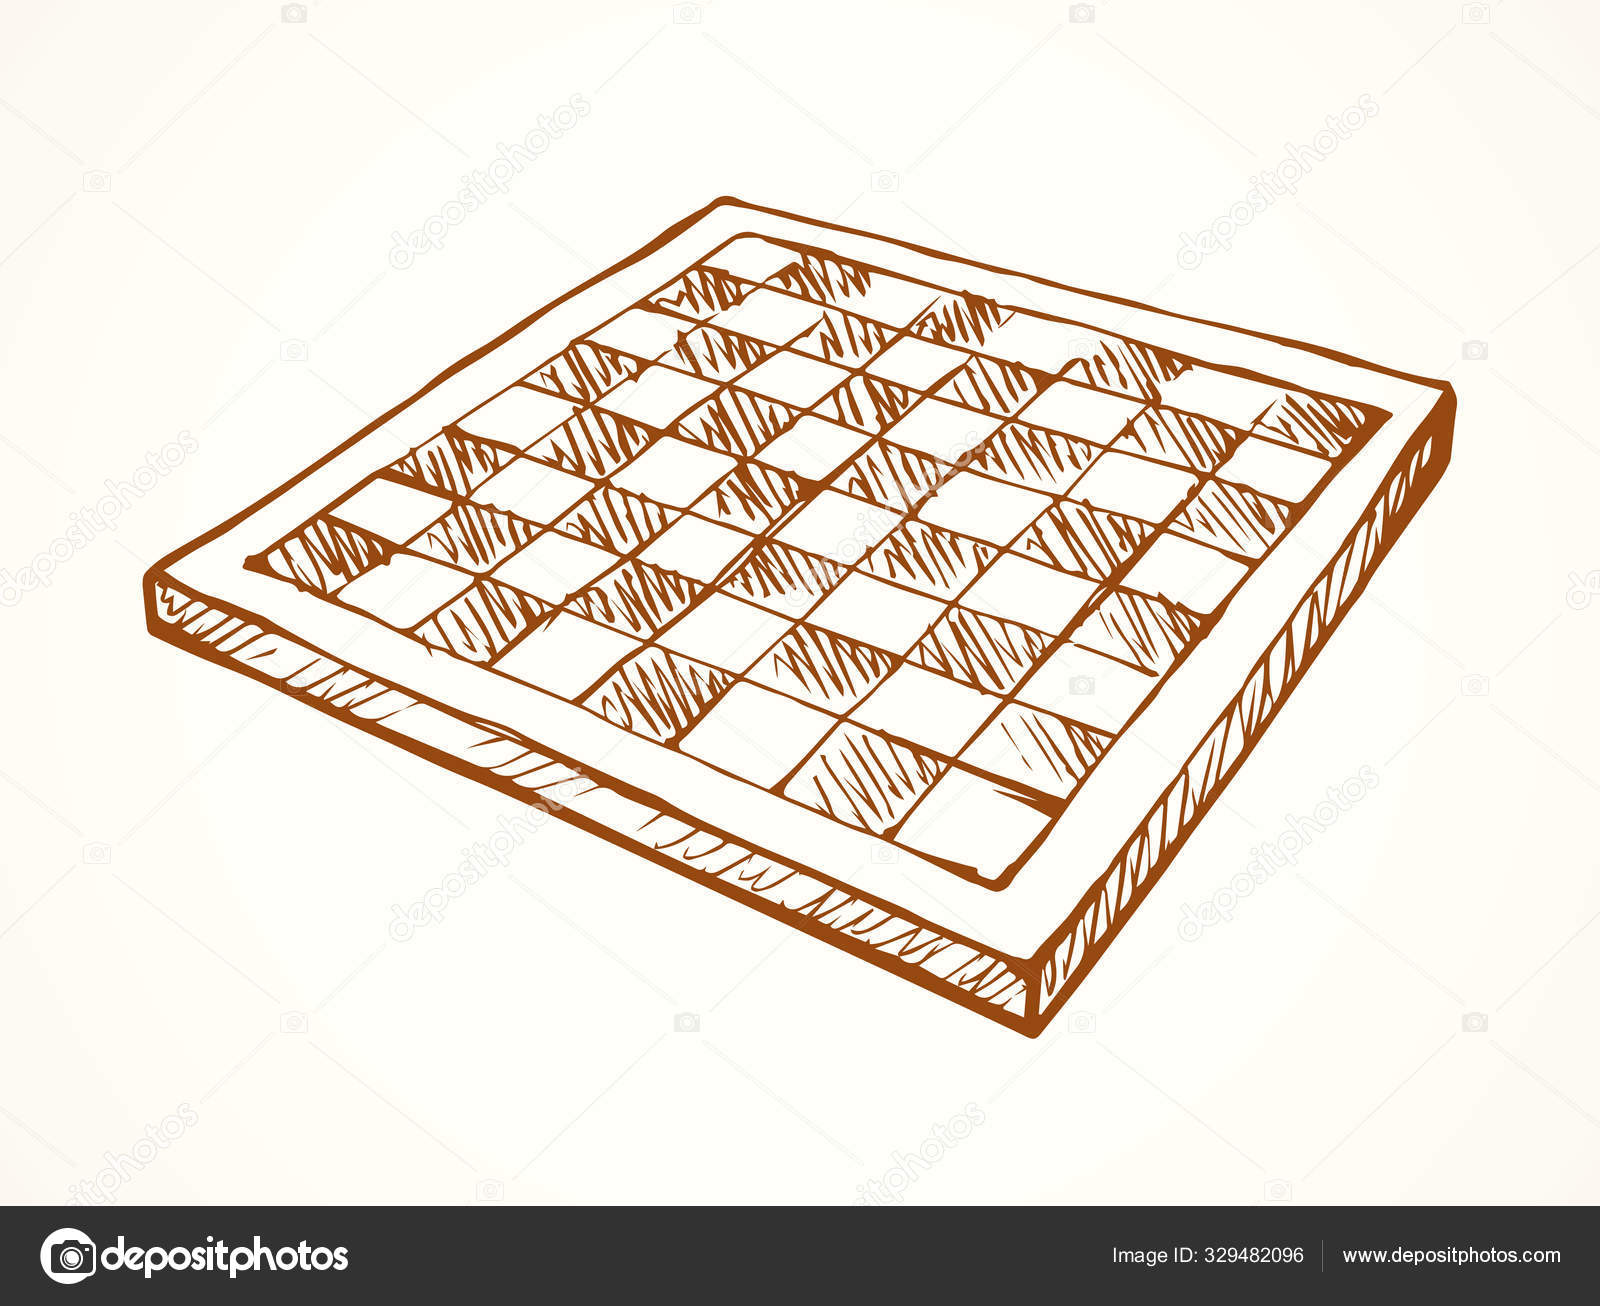 The Chess Board Vintage Illustration Art Drawing Line Vector, Art, Drawing,  Line PNG and Vector with Transparent Background for Free Download